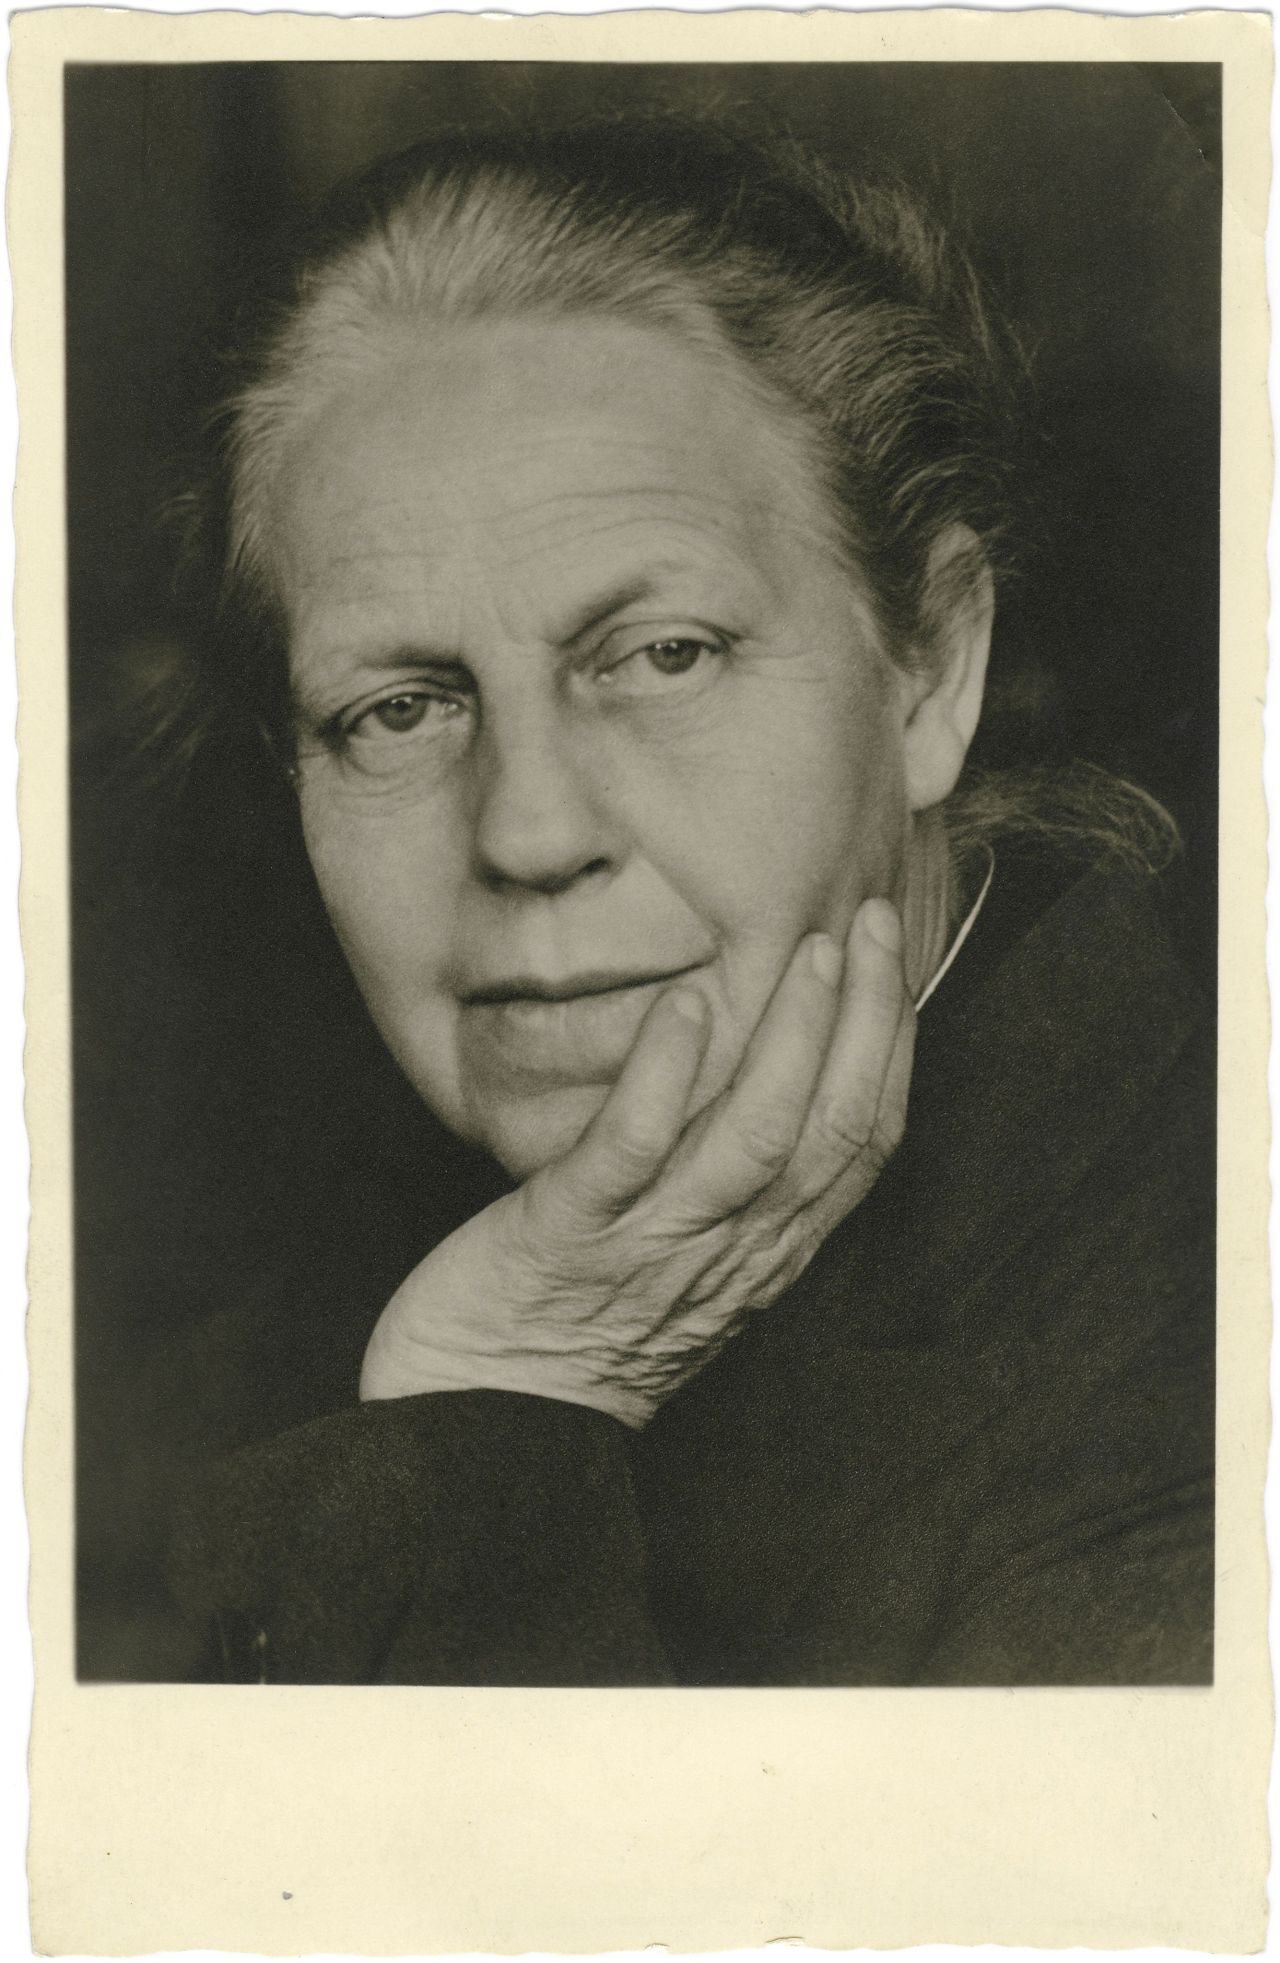 Porträtfoto der CDU-Politikerin Helene Weber, 1945 - 1962.